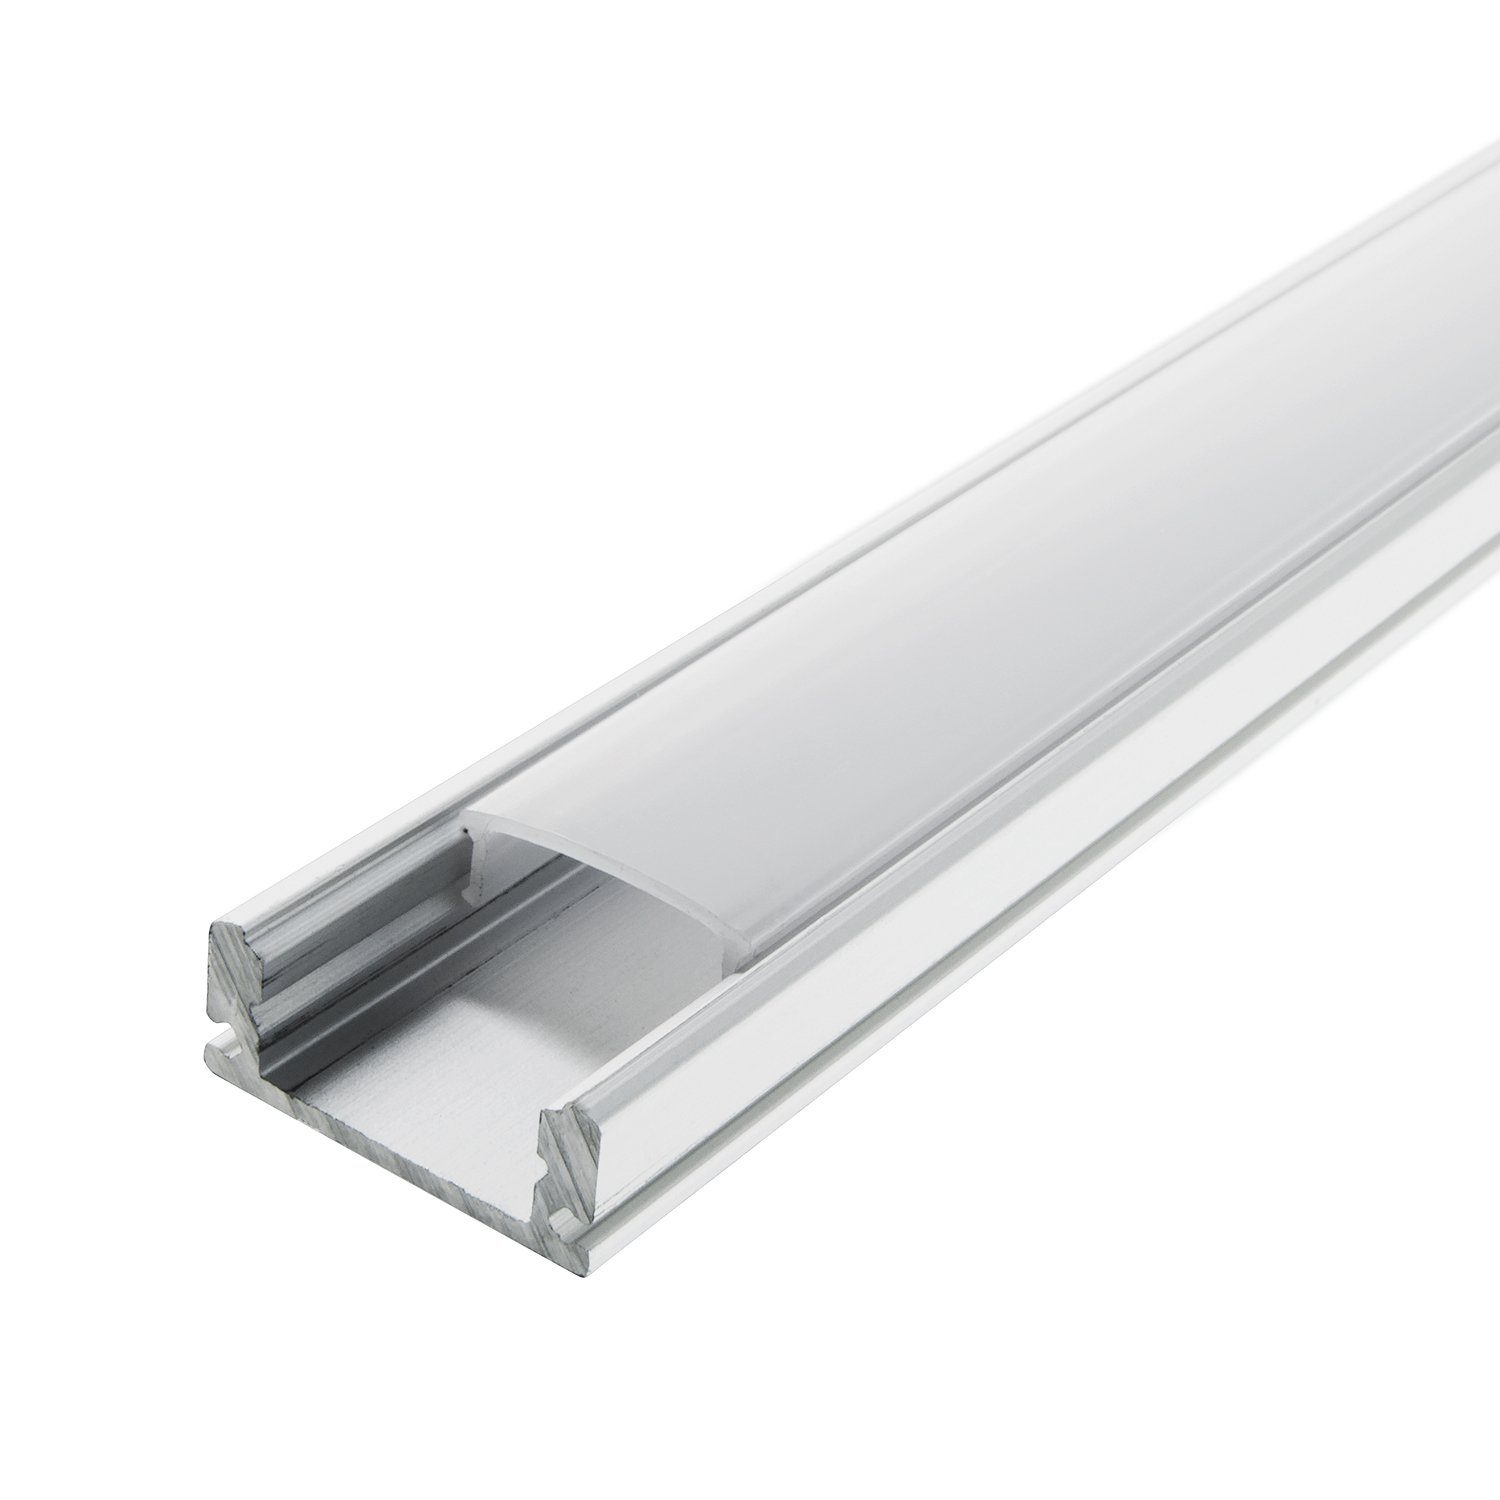 Endkappen Kanal LED LED-Stripe-Profil 200cm Leiste Clips Schiene Kanal LED inkl. Leiste Deckenanbringung, 2m Alu Aluprofile Profil ENERGMiX und Profil